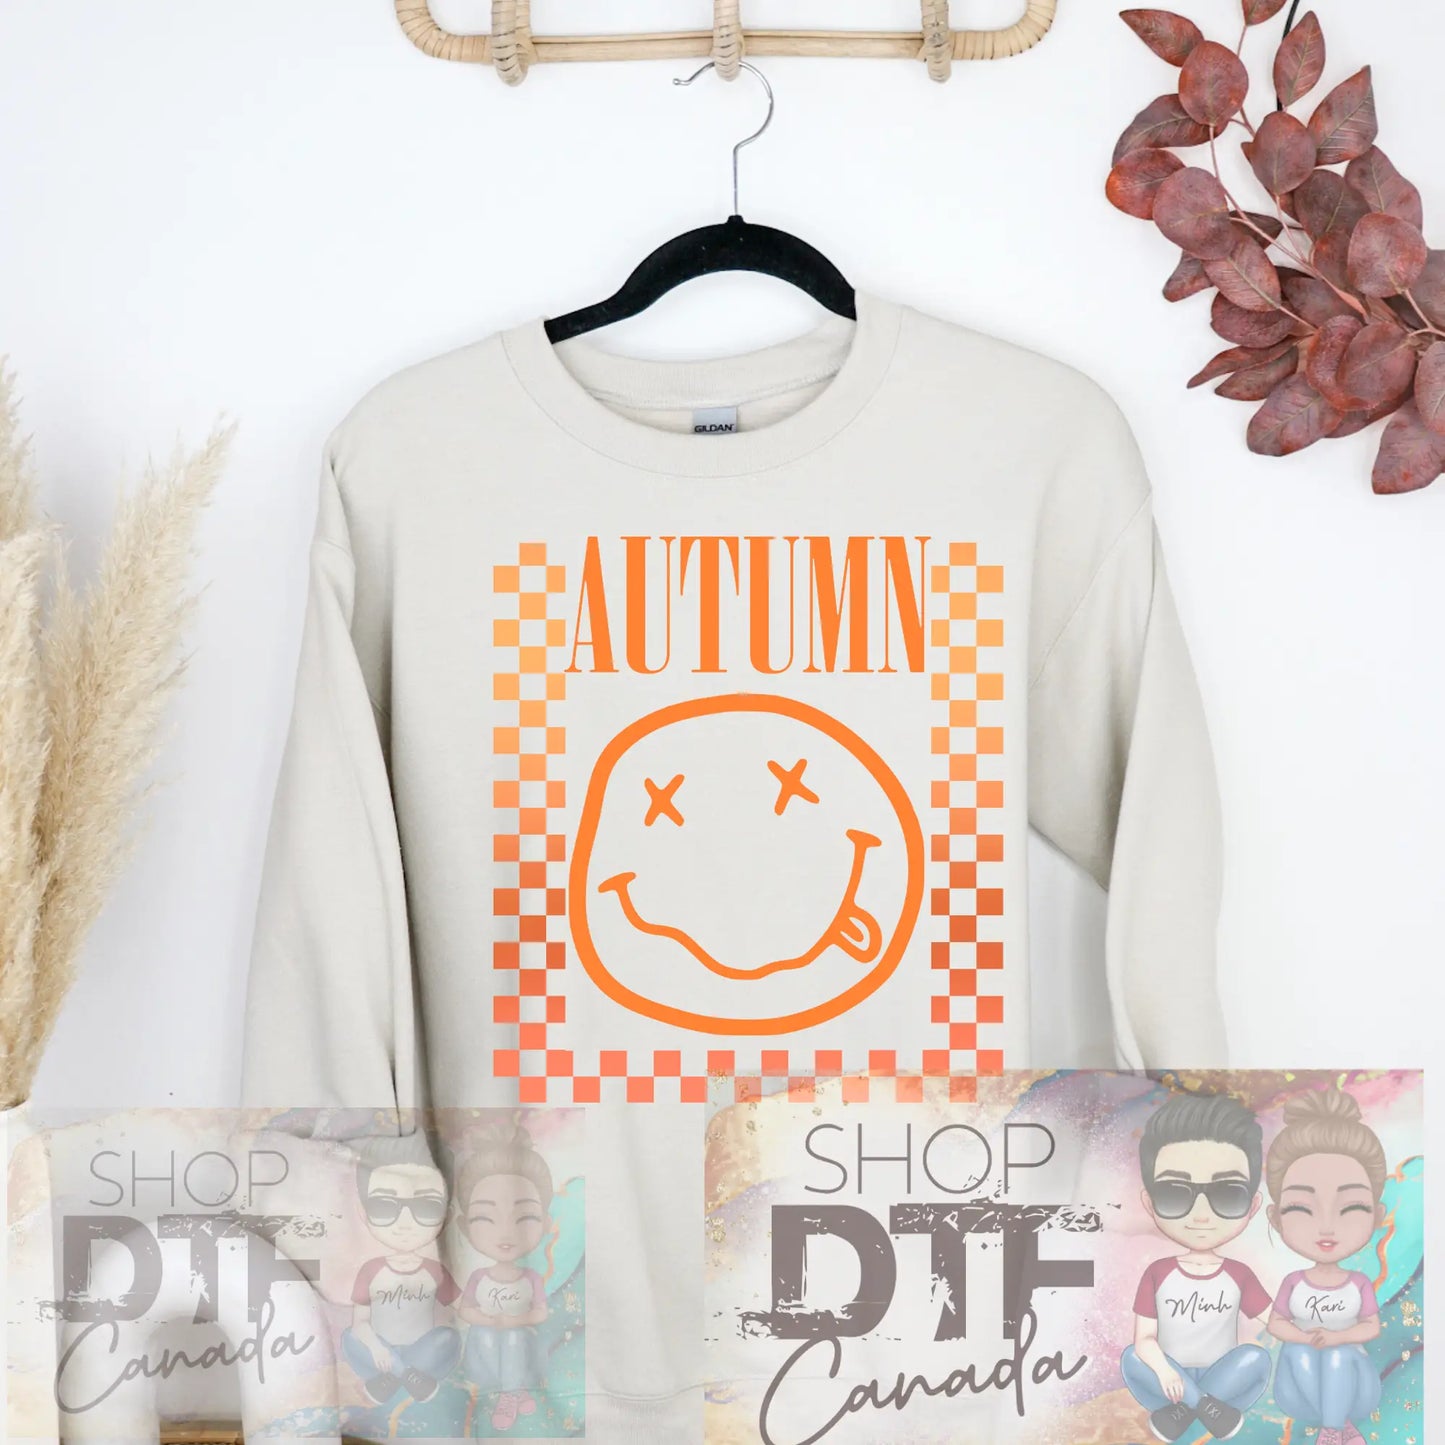 Fall - Autumn - Shirts & Tops